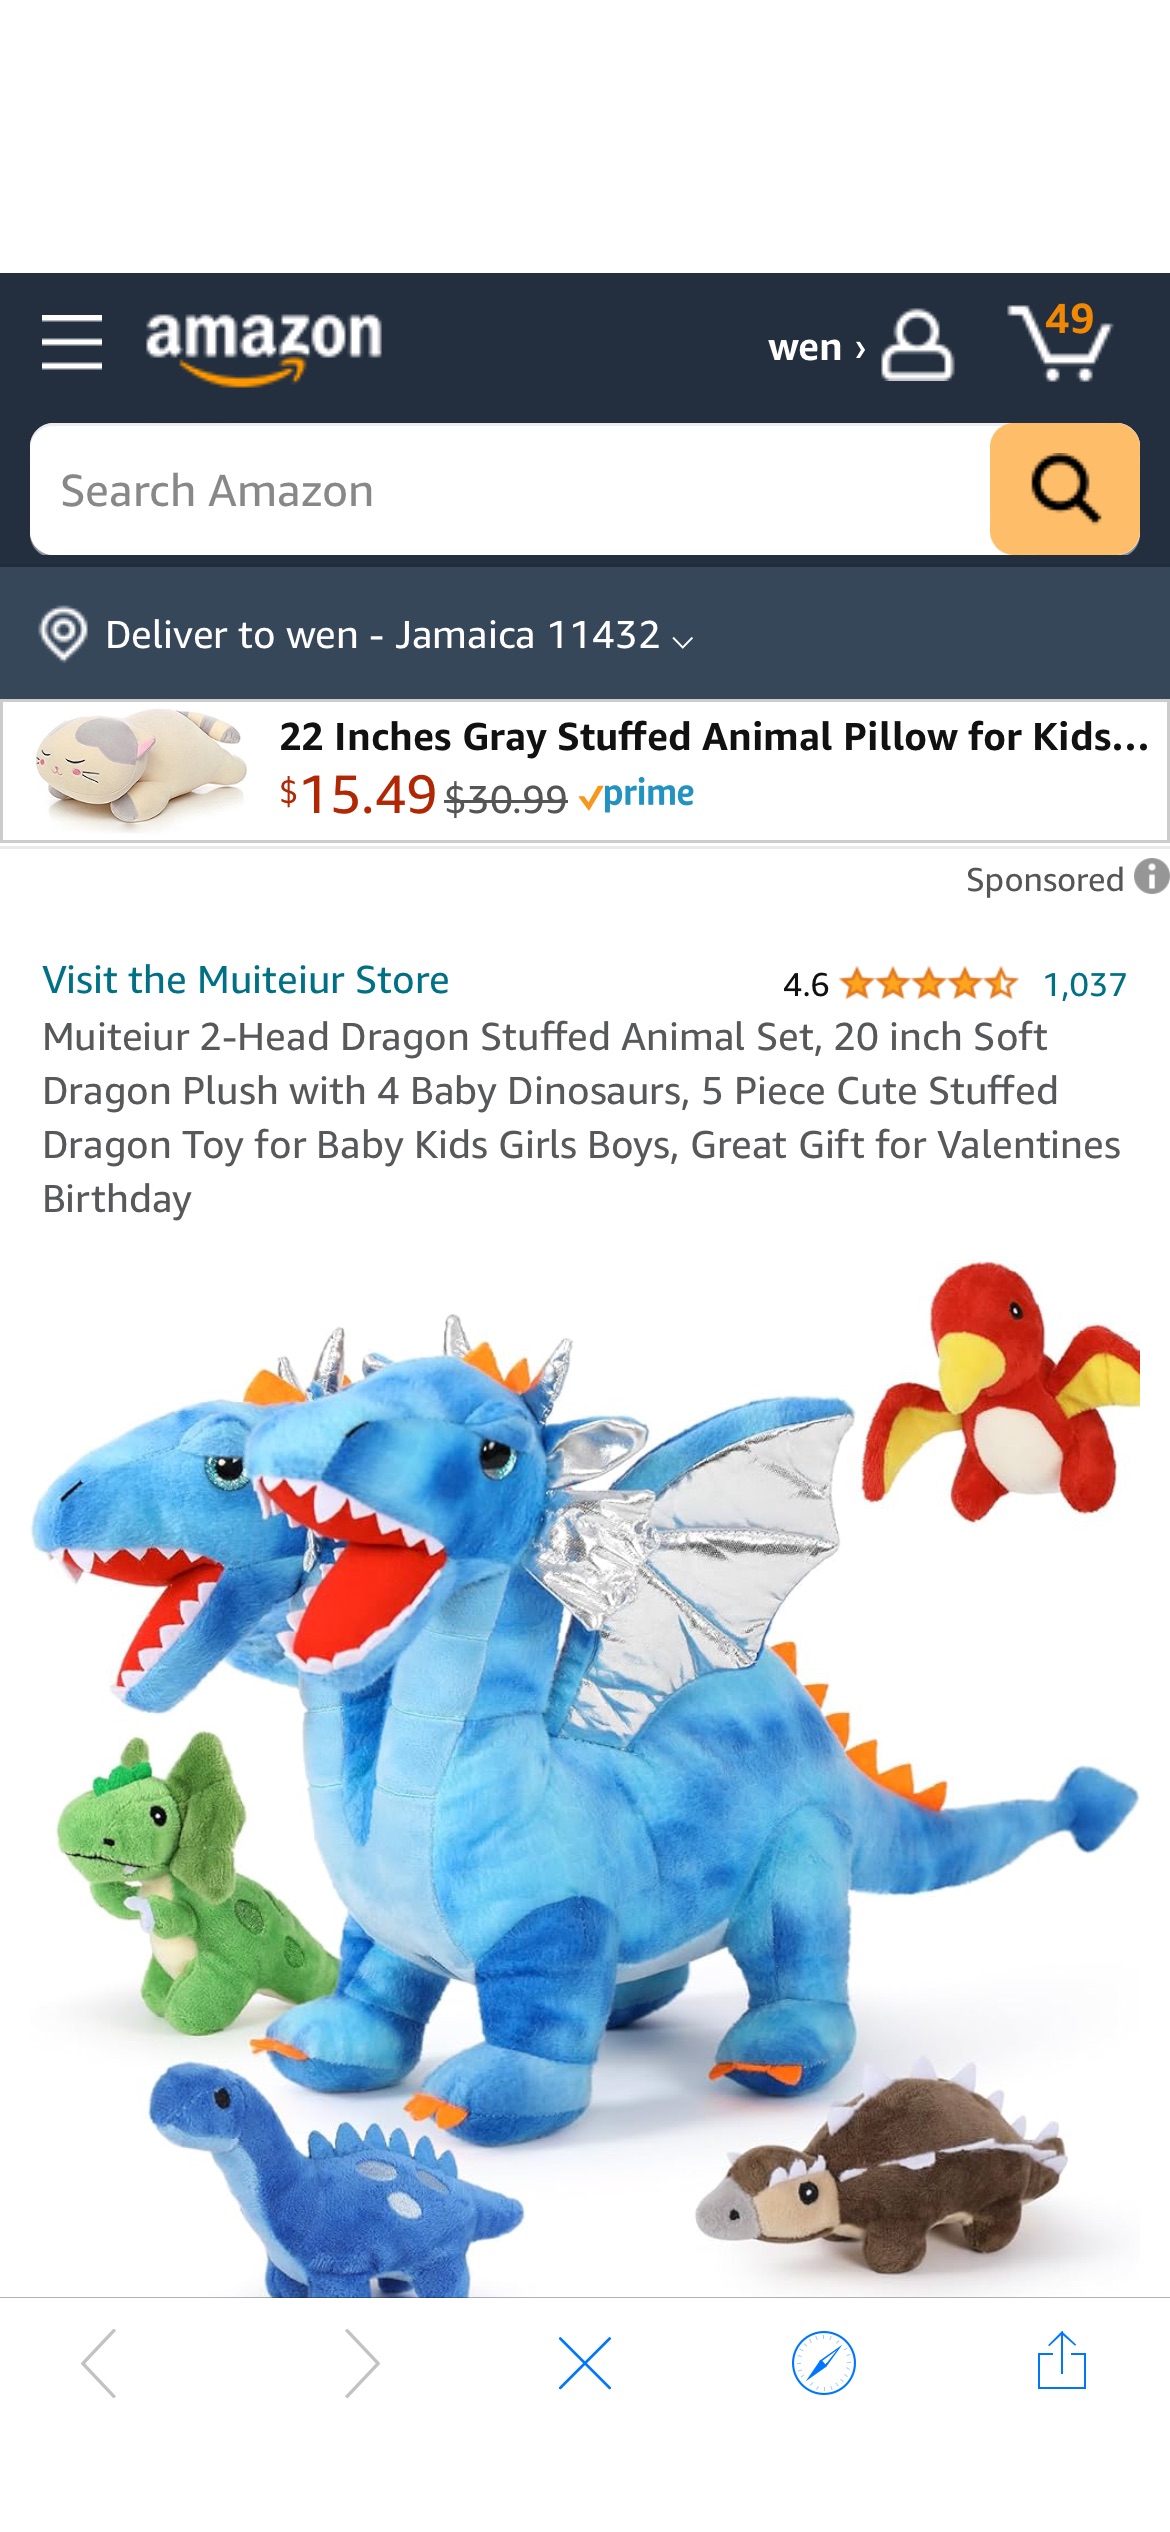 Amazon.com: Muiteiur 2-Head Dragon Stuffed Animal Set, 20 inch Soft Dragon Plush with 4 Baby Dinosaurs, 5 Piece Cute Stuffed Dragon Toy for Baby Kids Girls Boys, Great Gift for Valentines Birthday : T